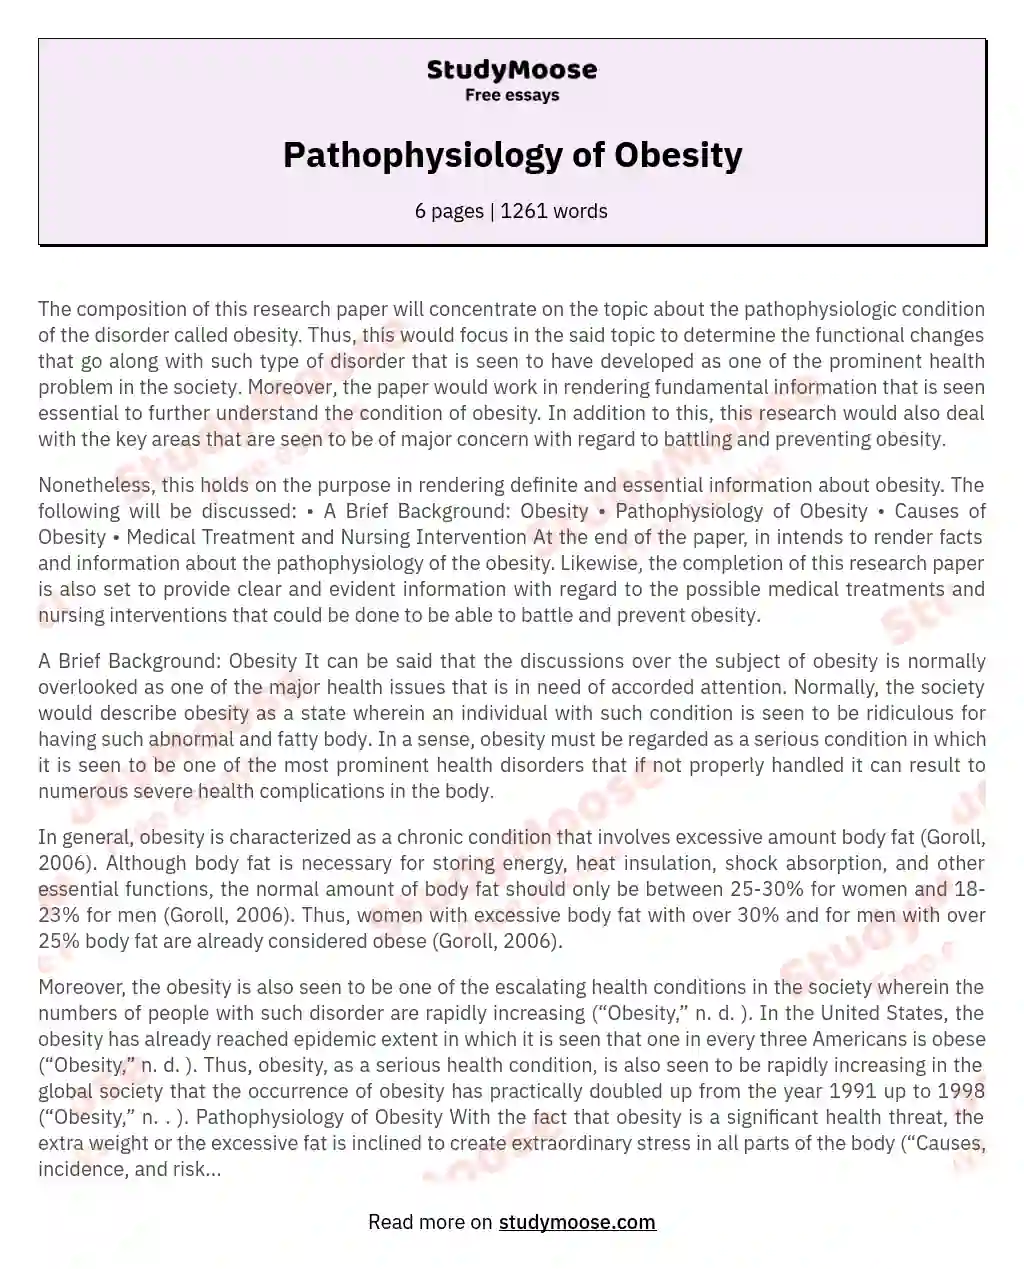 Pathophysiology of Obesity essay